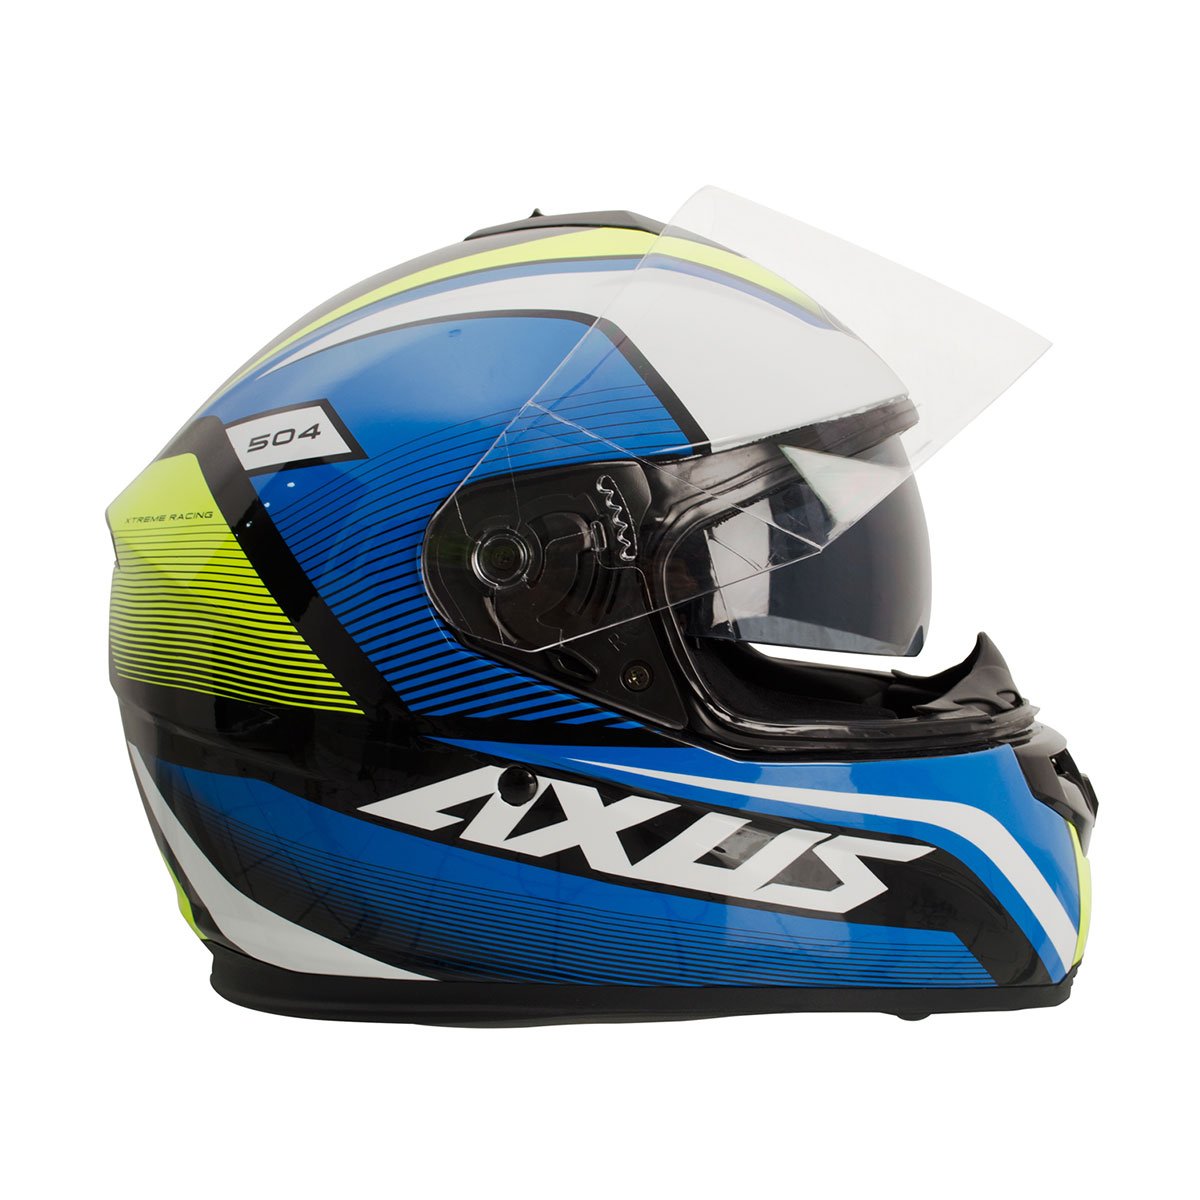 Casco Cerrado Doble Visor Racing Azul Axus - Extra Grande